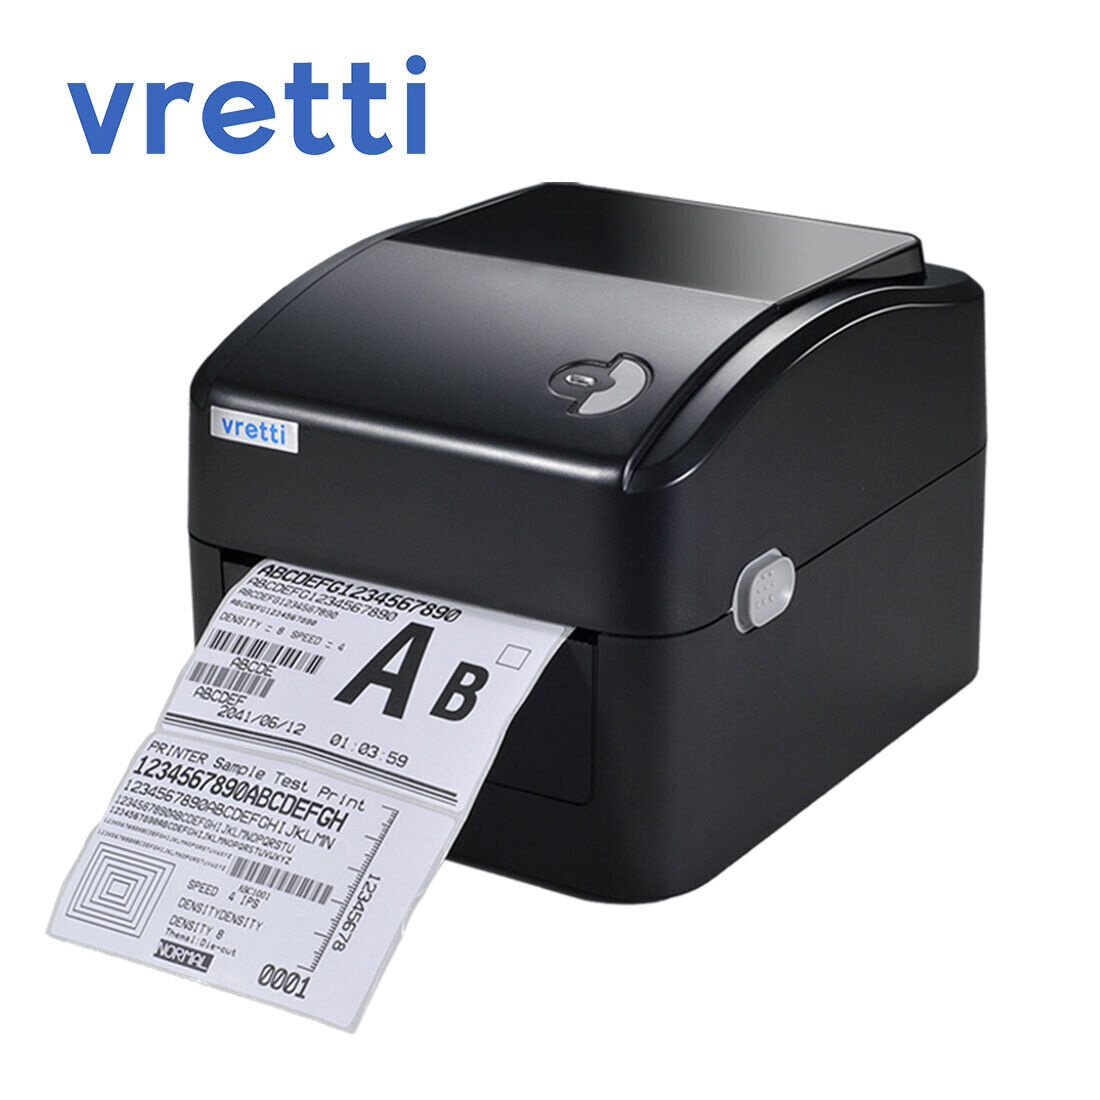 VRETTI Desktop Label Printers 4x6 UPS USPS Shipping Label Makers Bluetooth WIFI